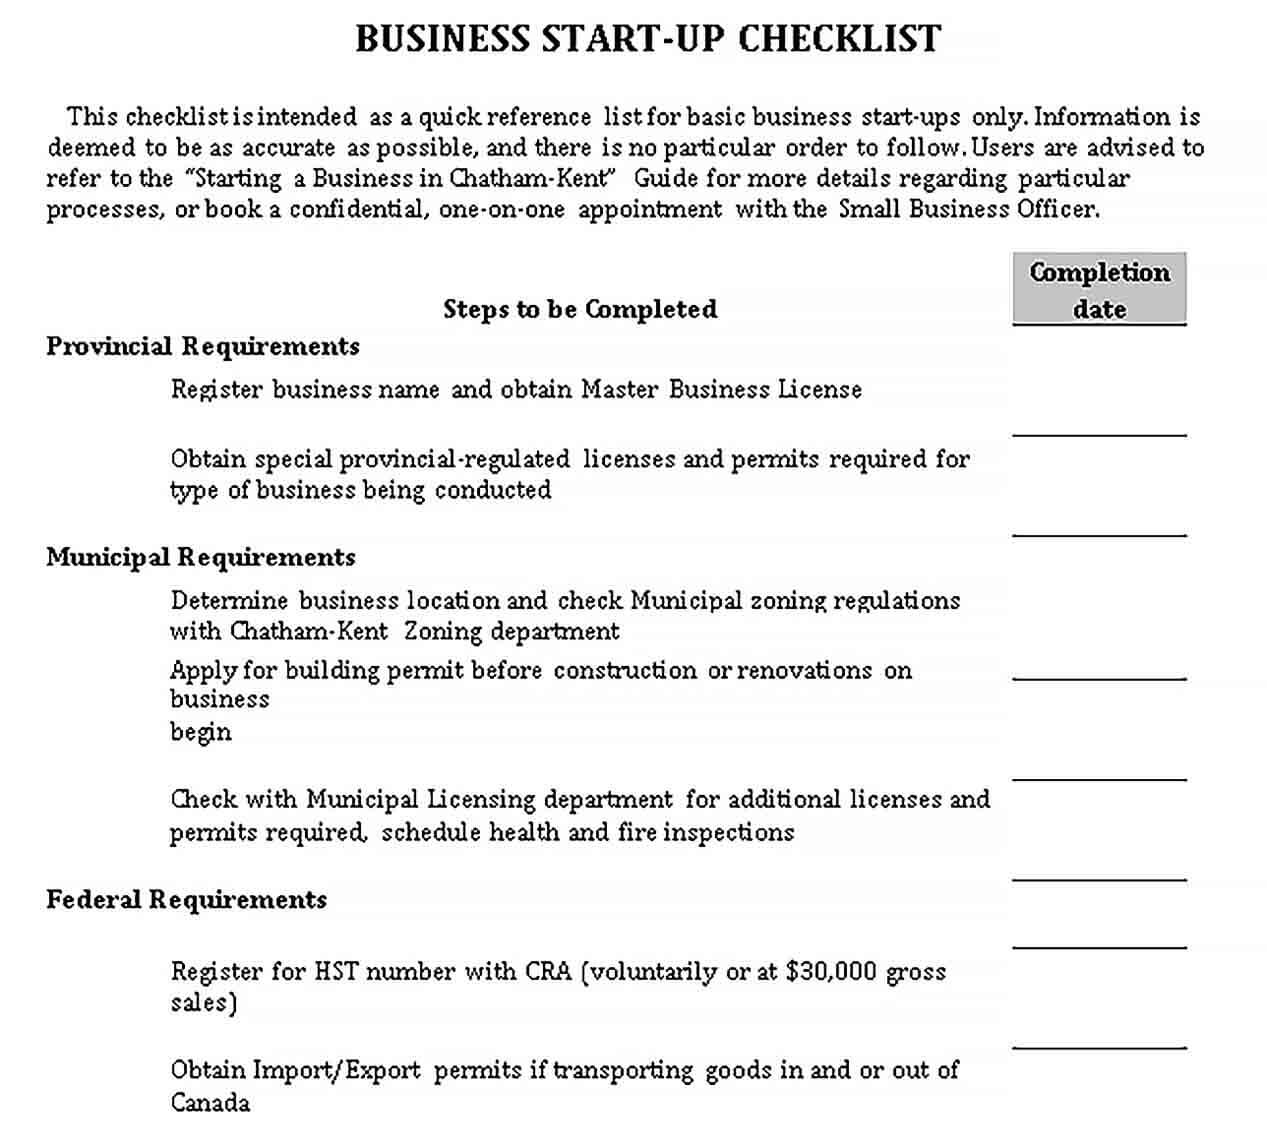 Sample Business Checklist for Startup